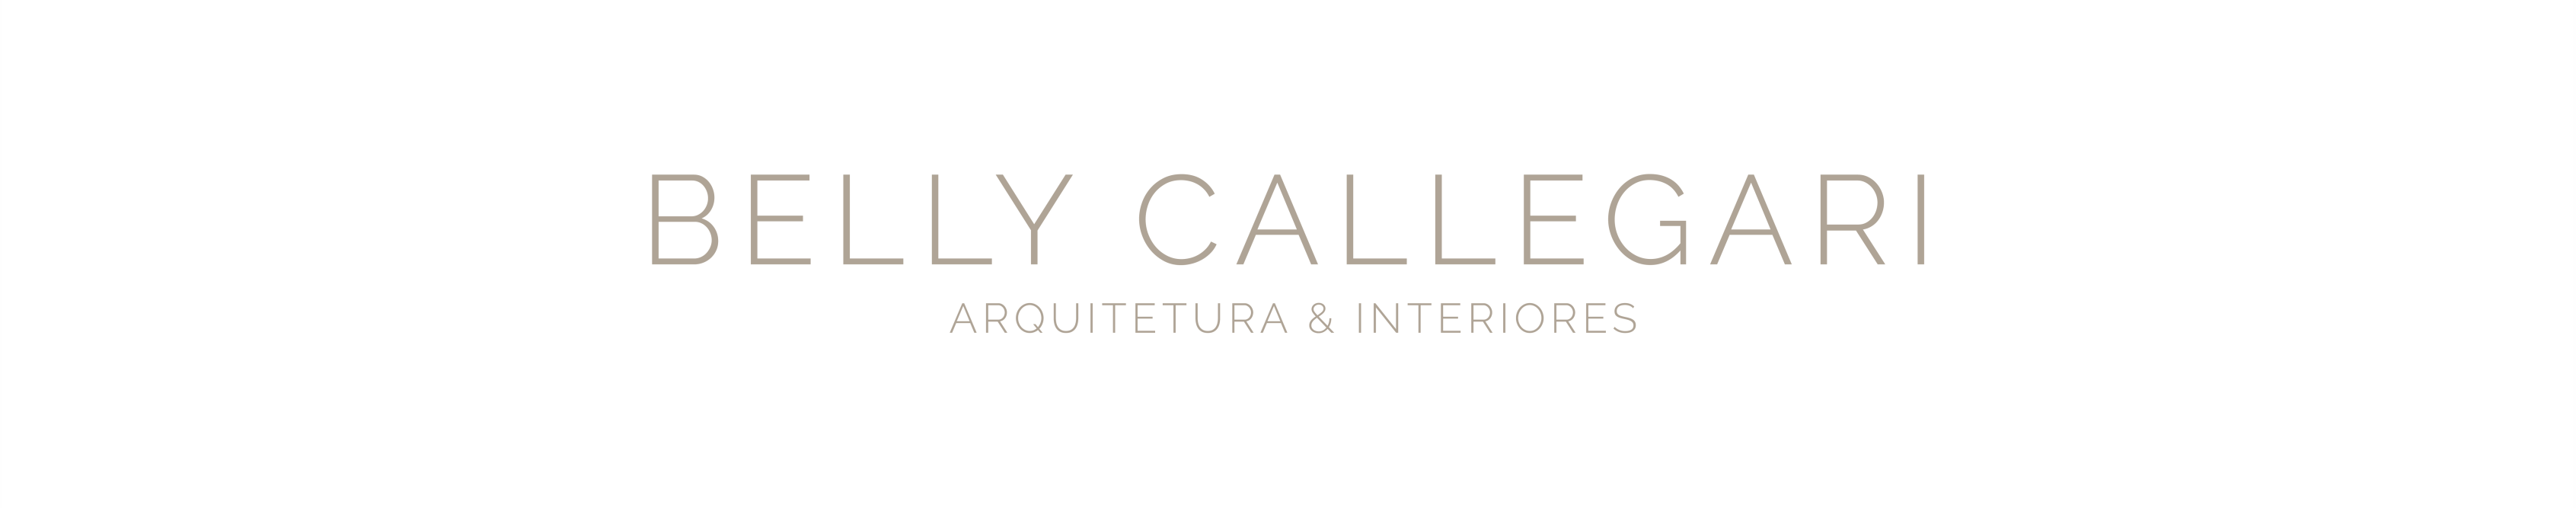 Bannière de profil de Belly Callegari